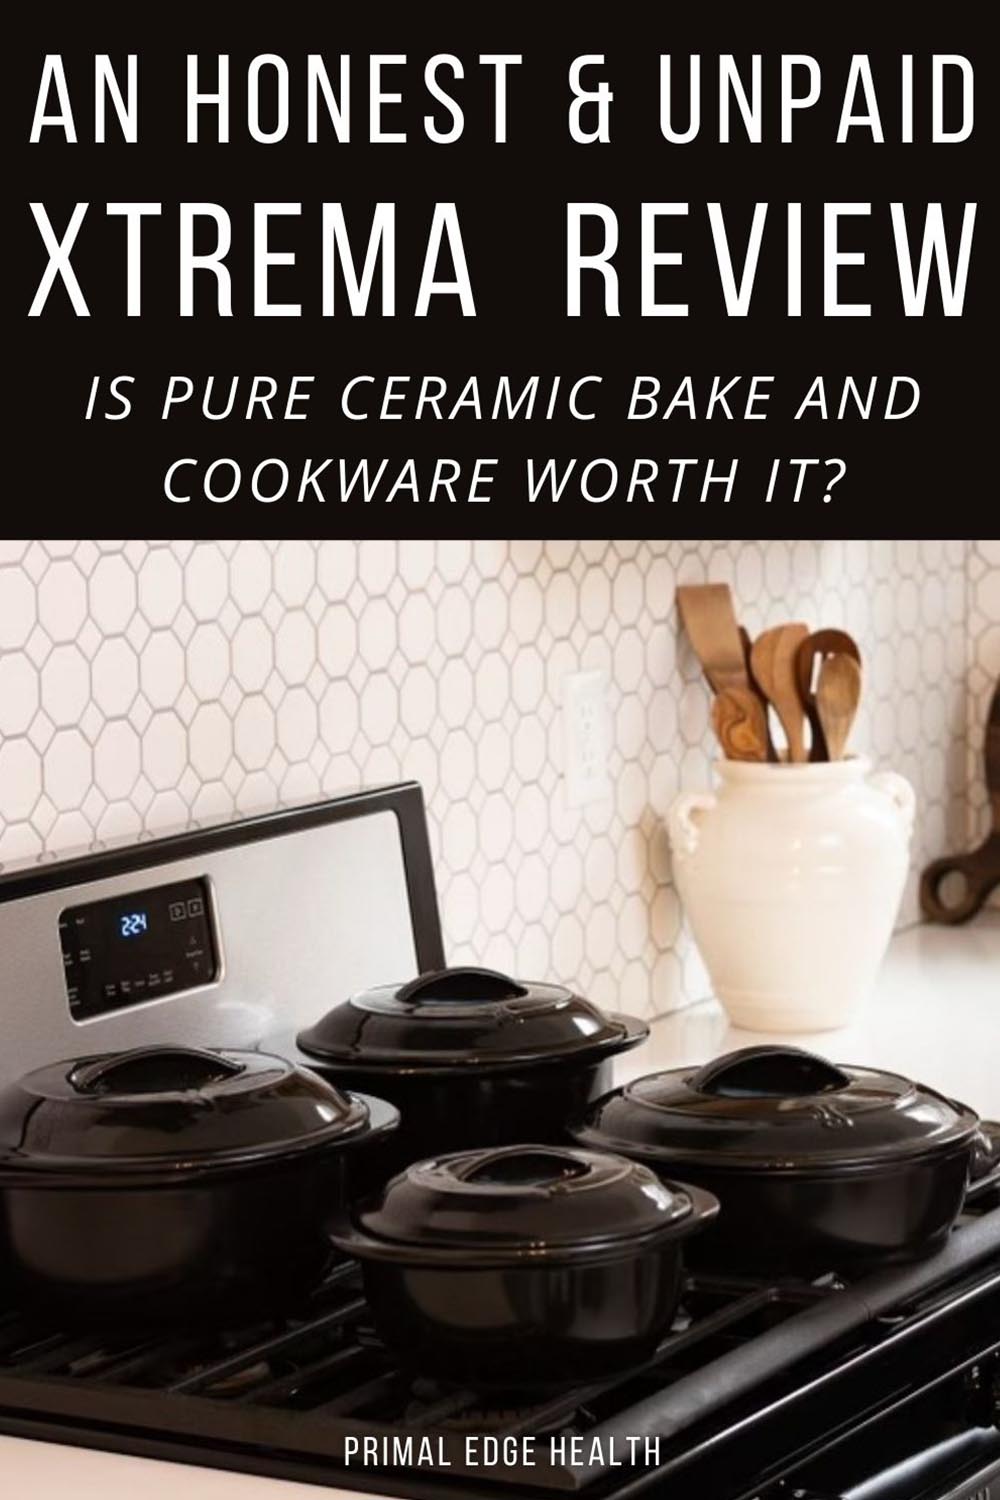 Xtrema Ceramic Cookware Review